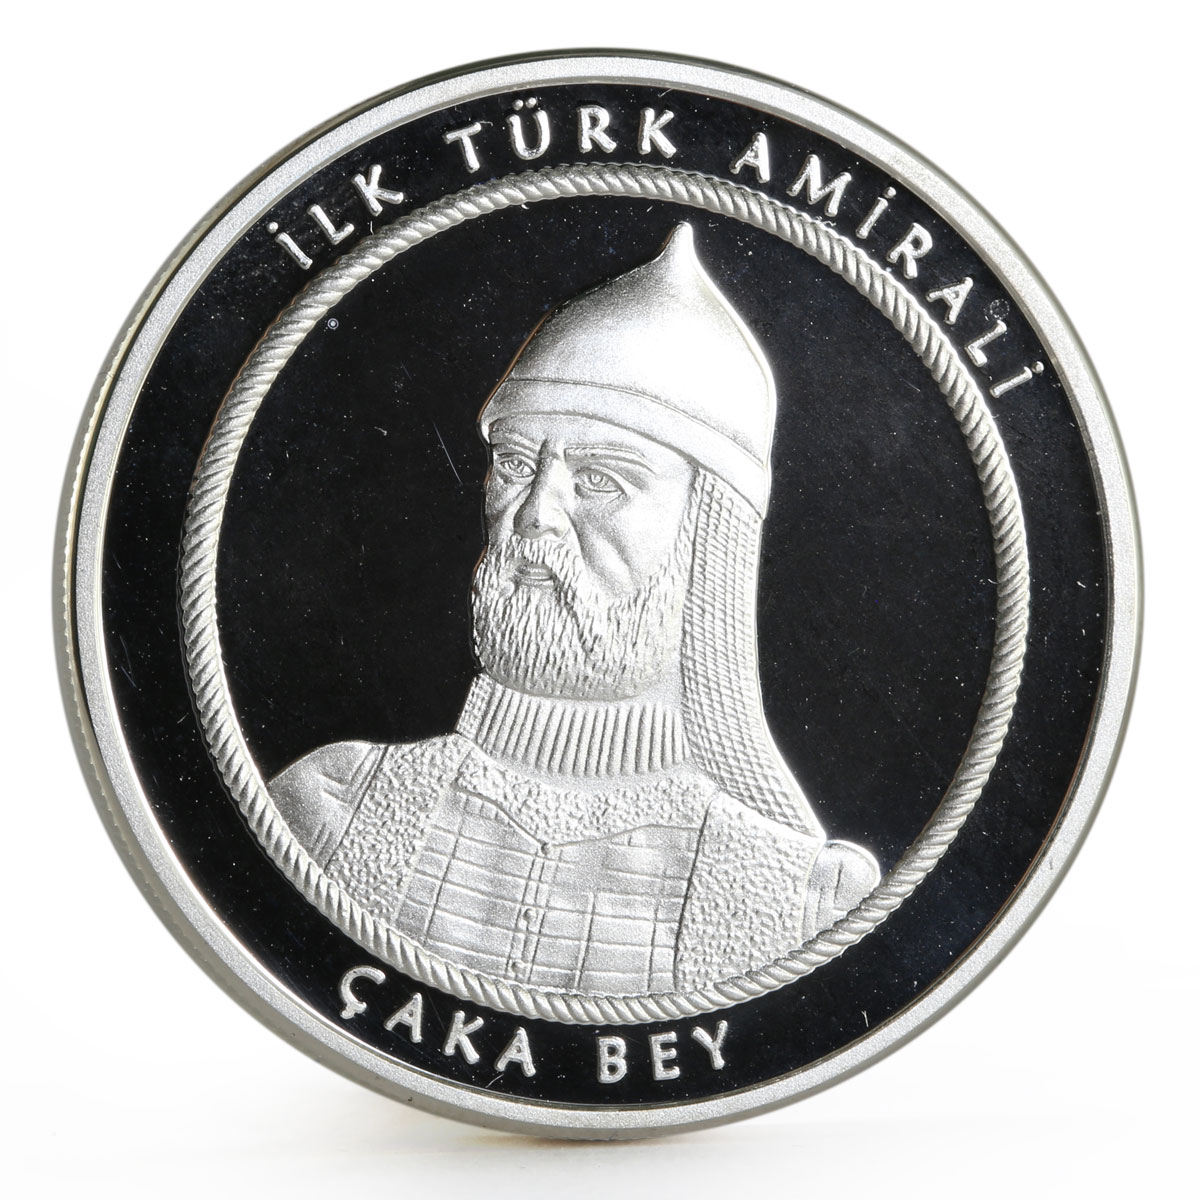 Turkey 20 lira Chaka Bey the Seljuk Commander of Warships proof silver coin 2016